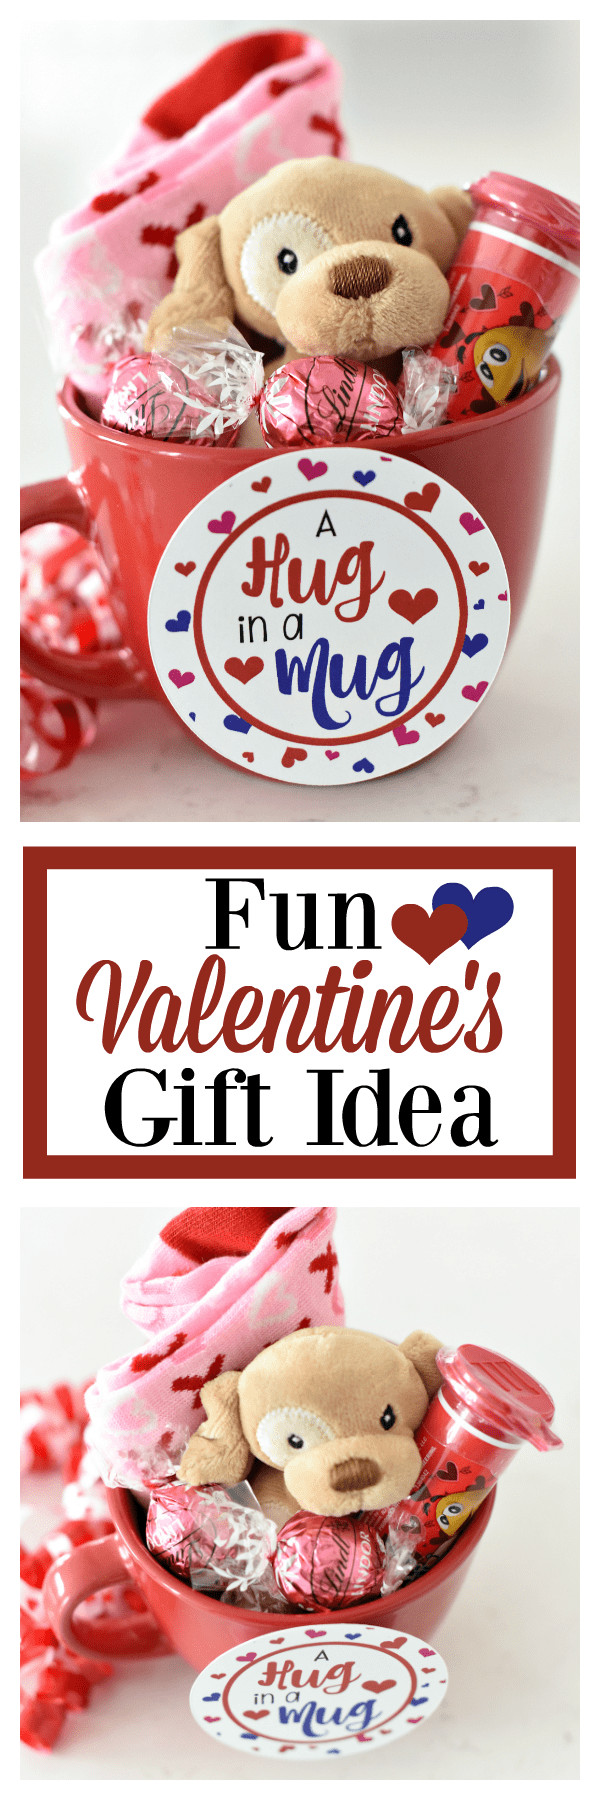 Ideas For Valentine Gift
 Fun Valentines Gift Idea for Kids – Fun Squared